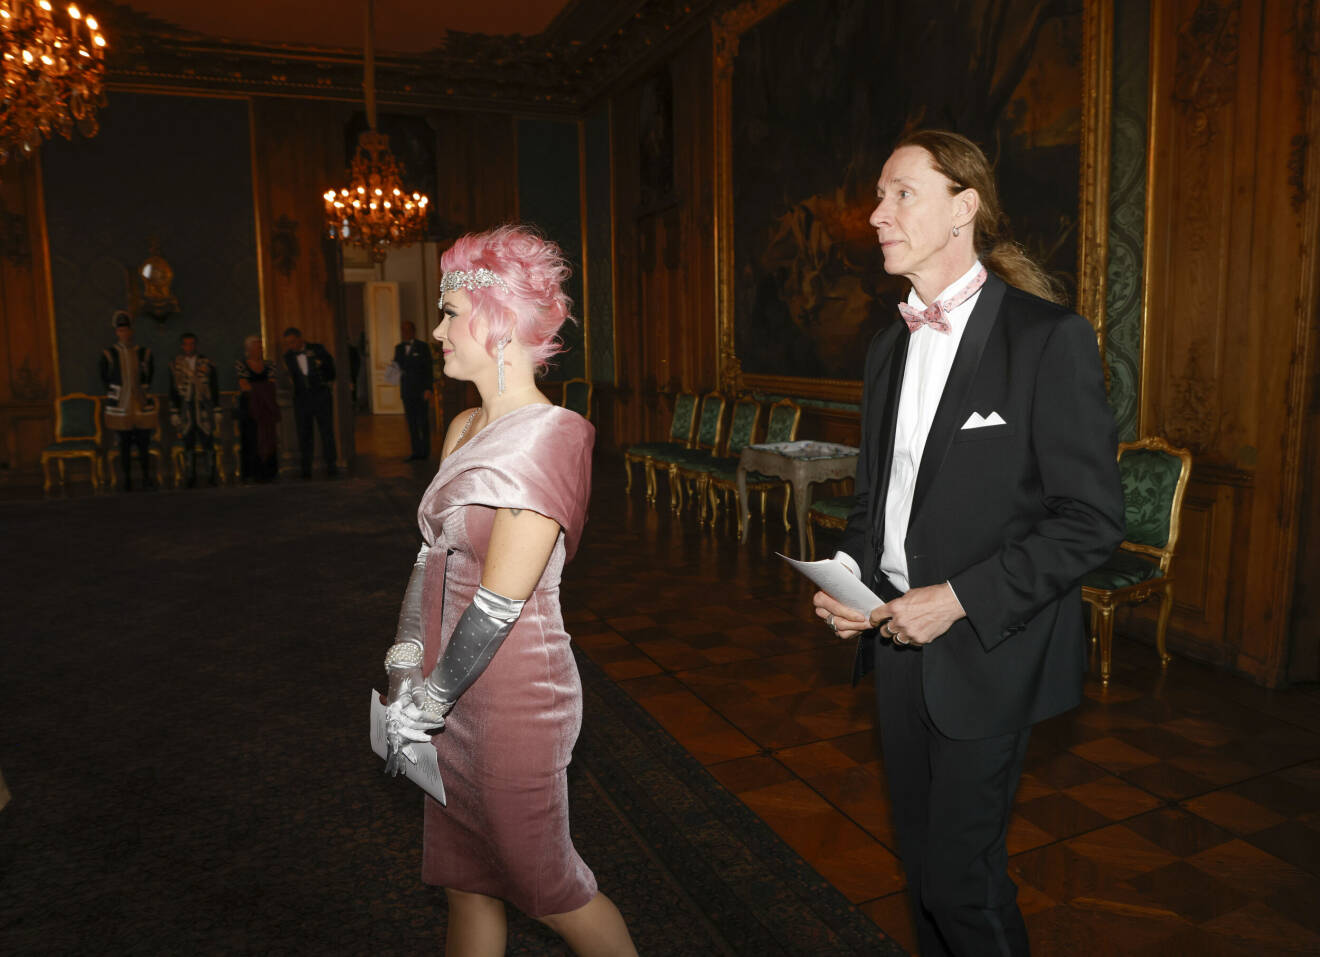 Martin "E-type" Erikson med flickvännen Melinda Jacobs kommer till Sverigemiddagen på Stockholms slott på fredagen.